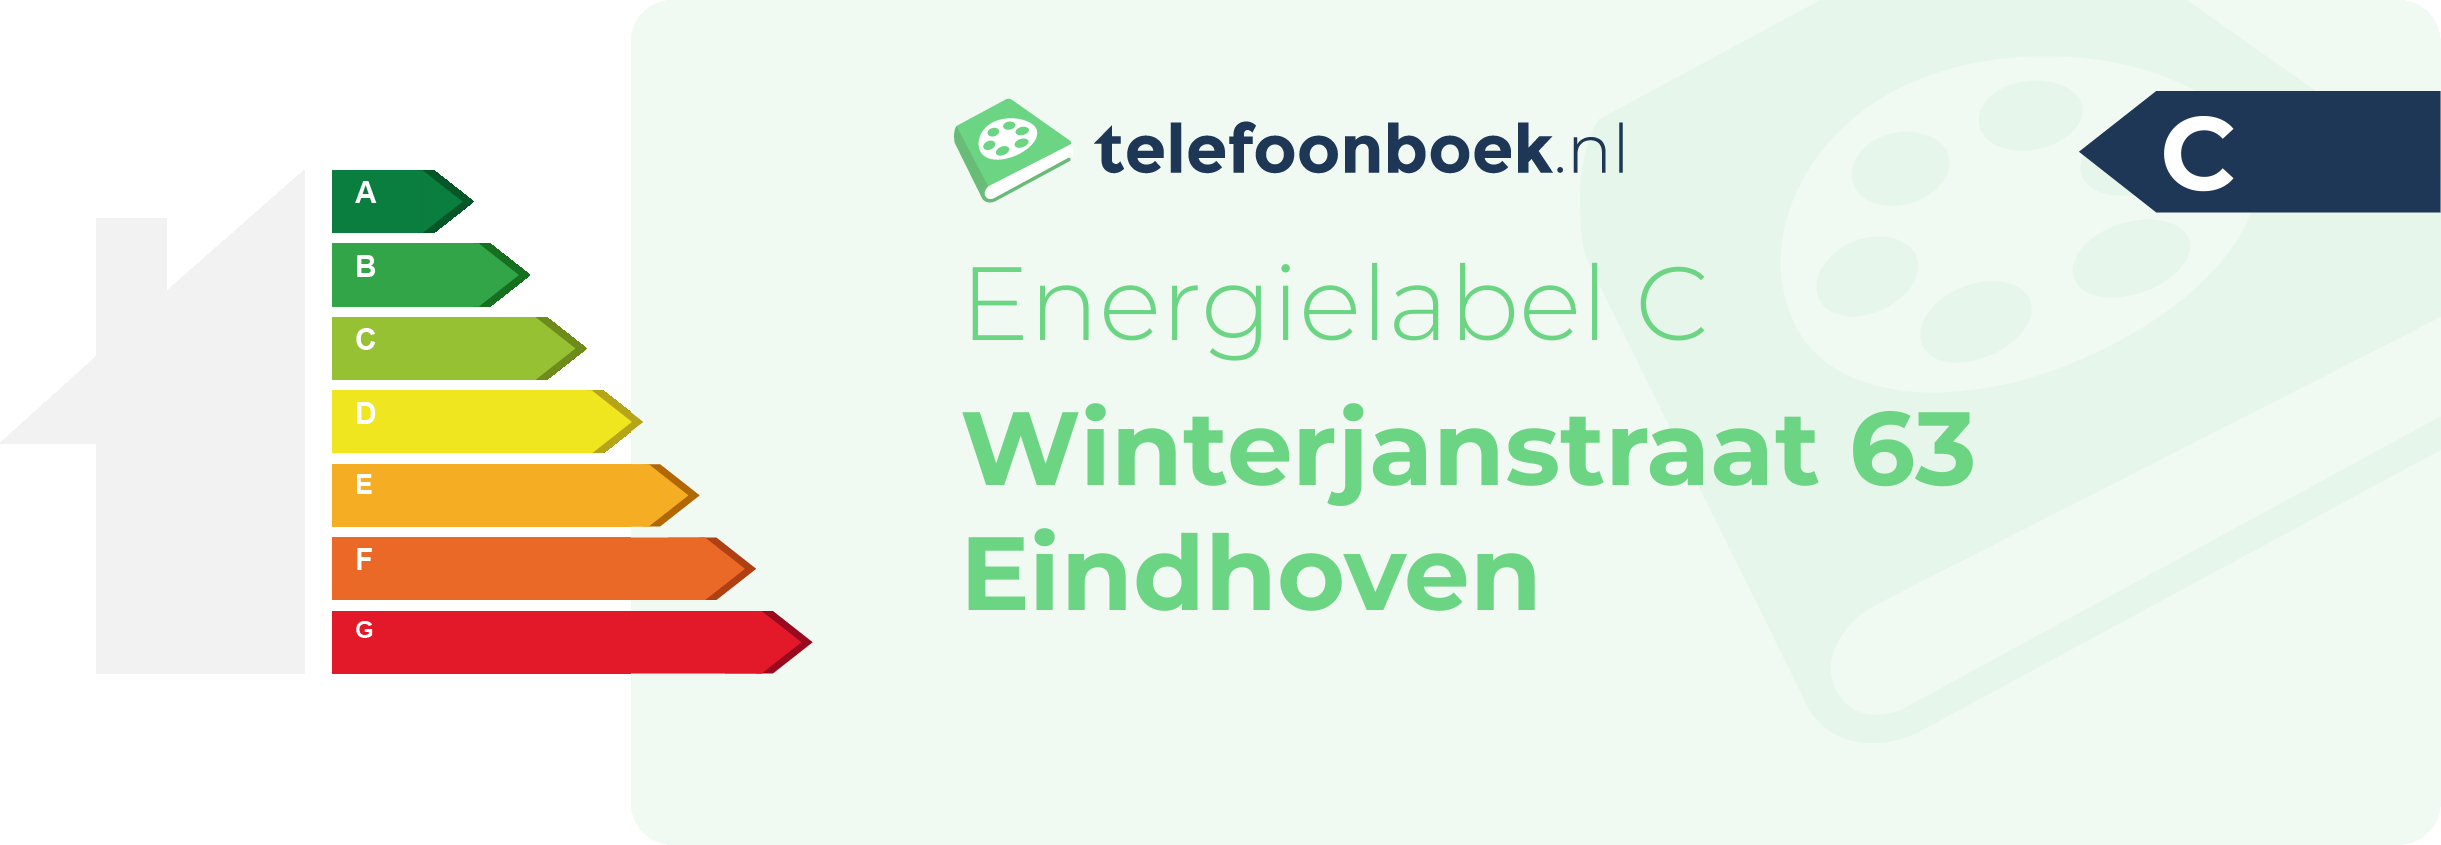 Energielabel Winterjanstraat 63 Eindhoven